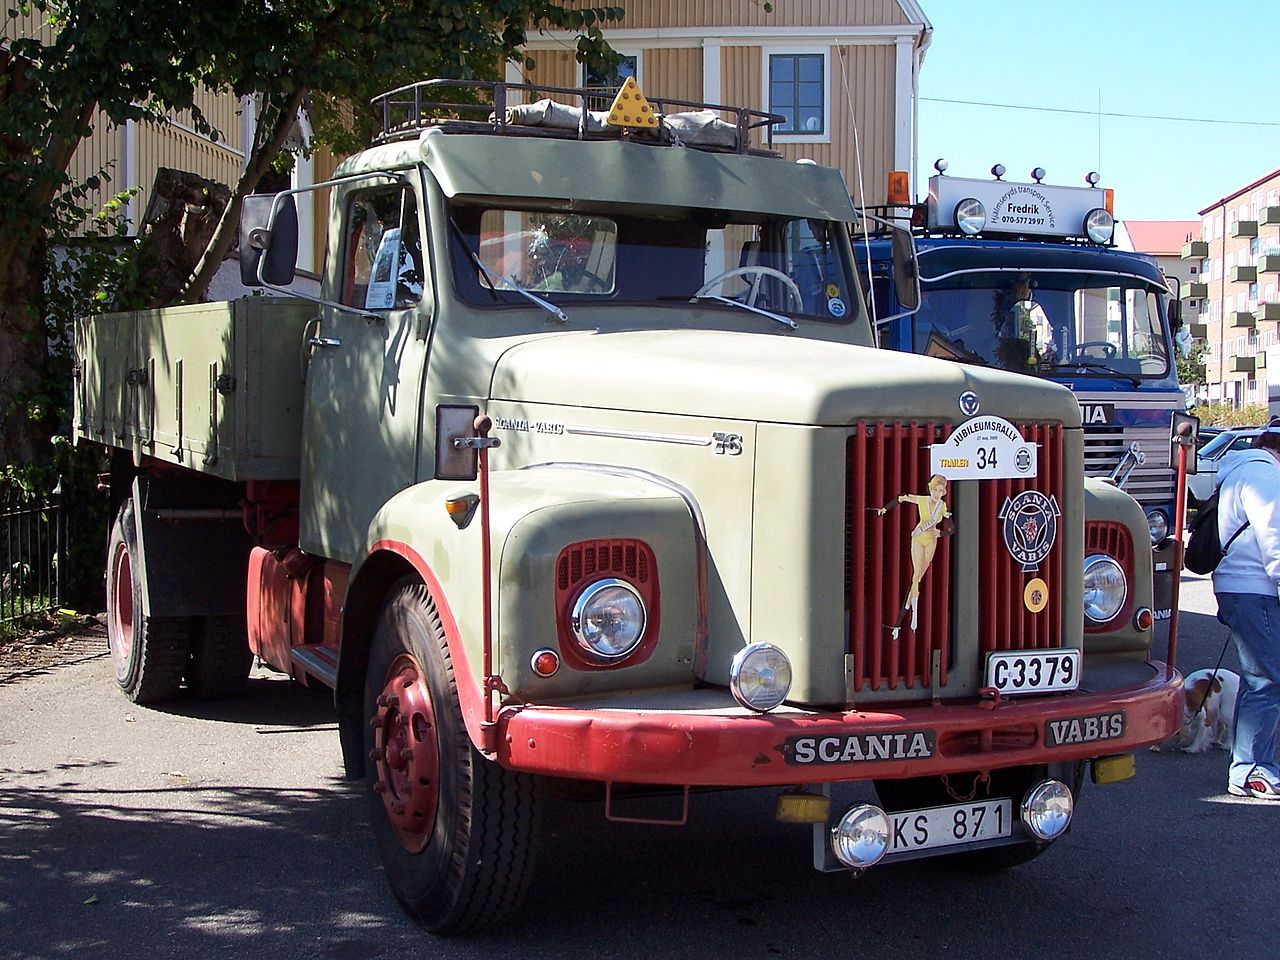 File:Scania Vabis L76.jpg - Wikimedia Commons